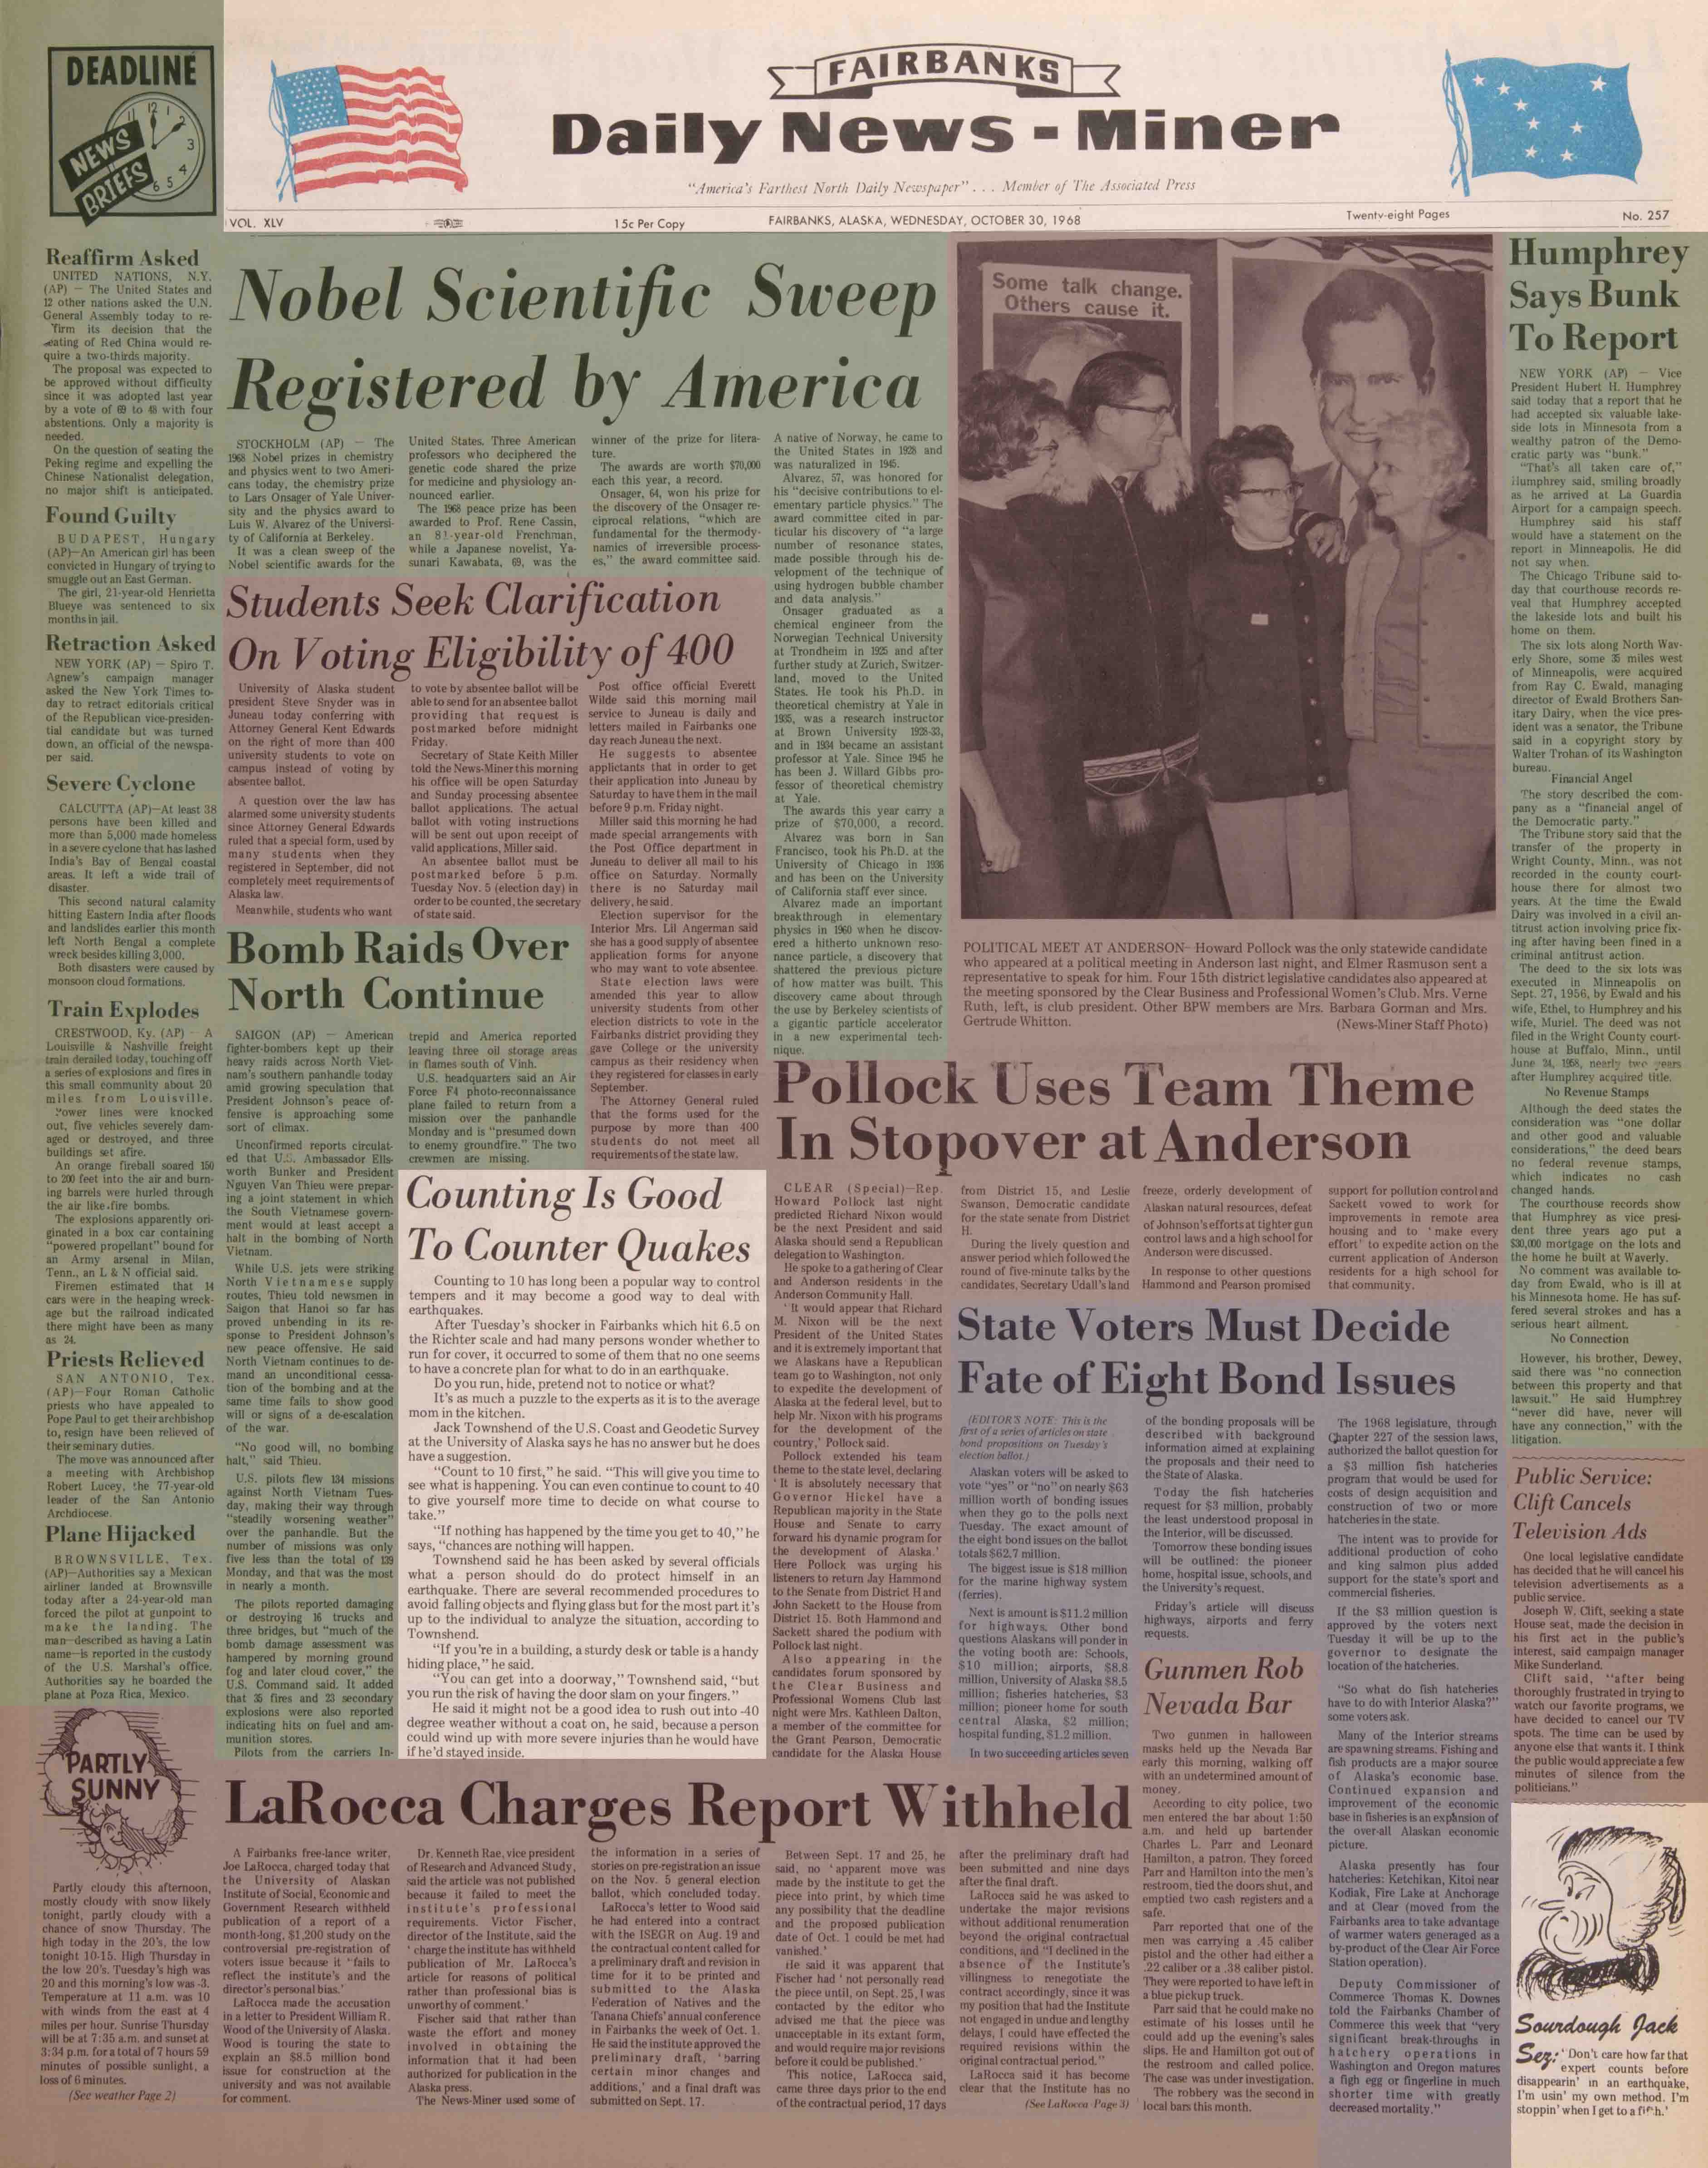 1968 October 30, Fairbanks Daily News-Miner (pg 1)